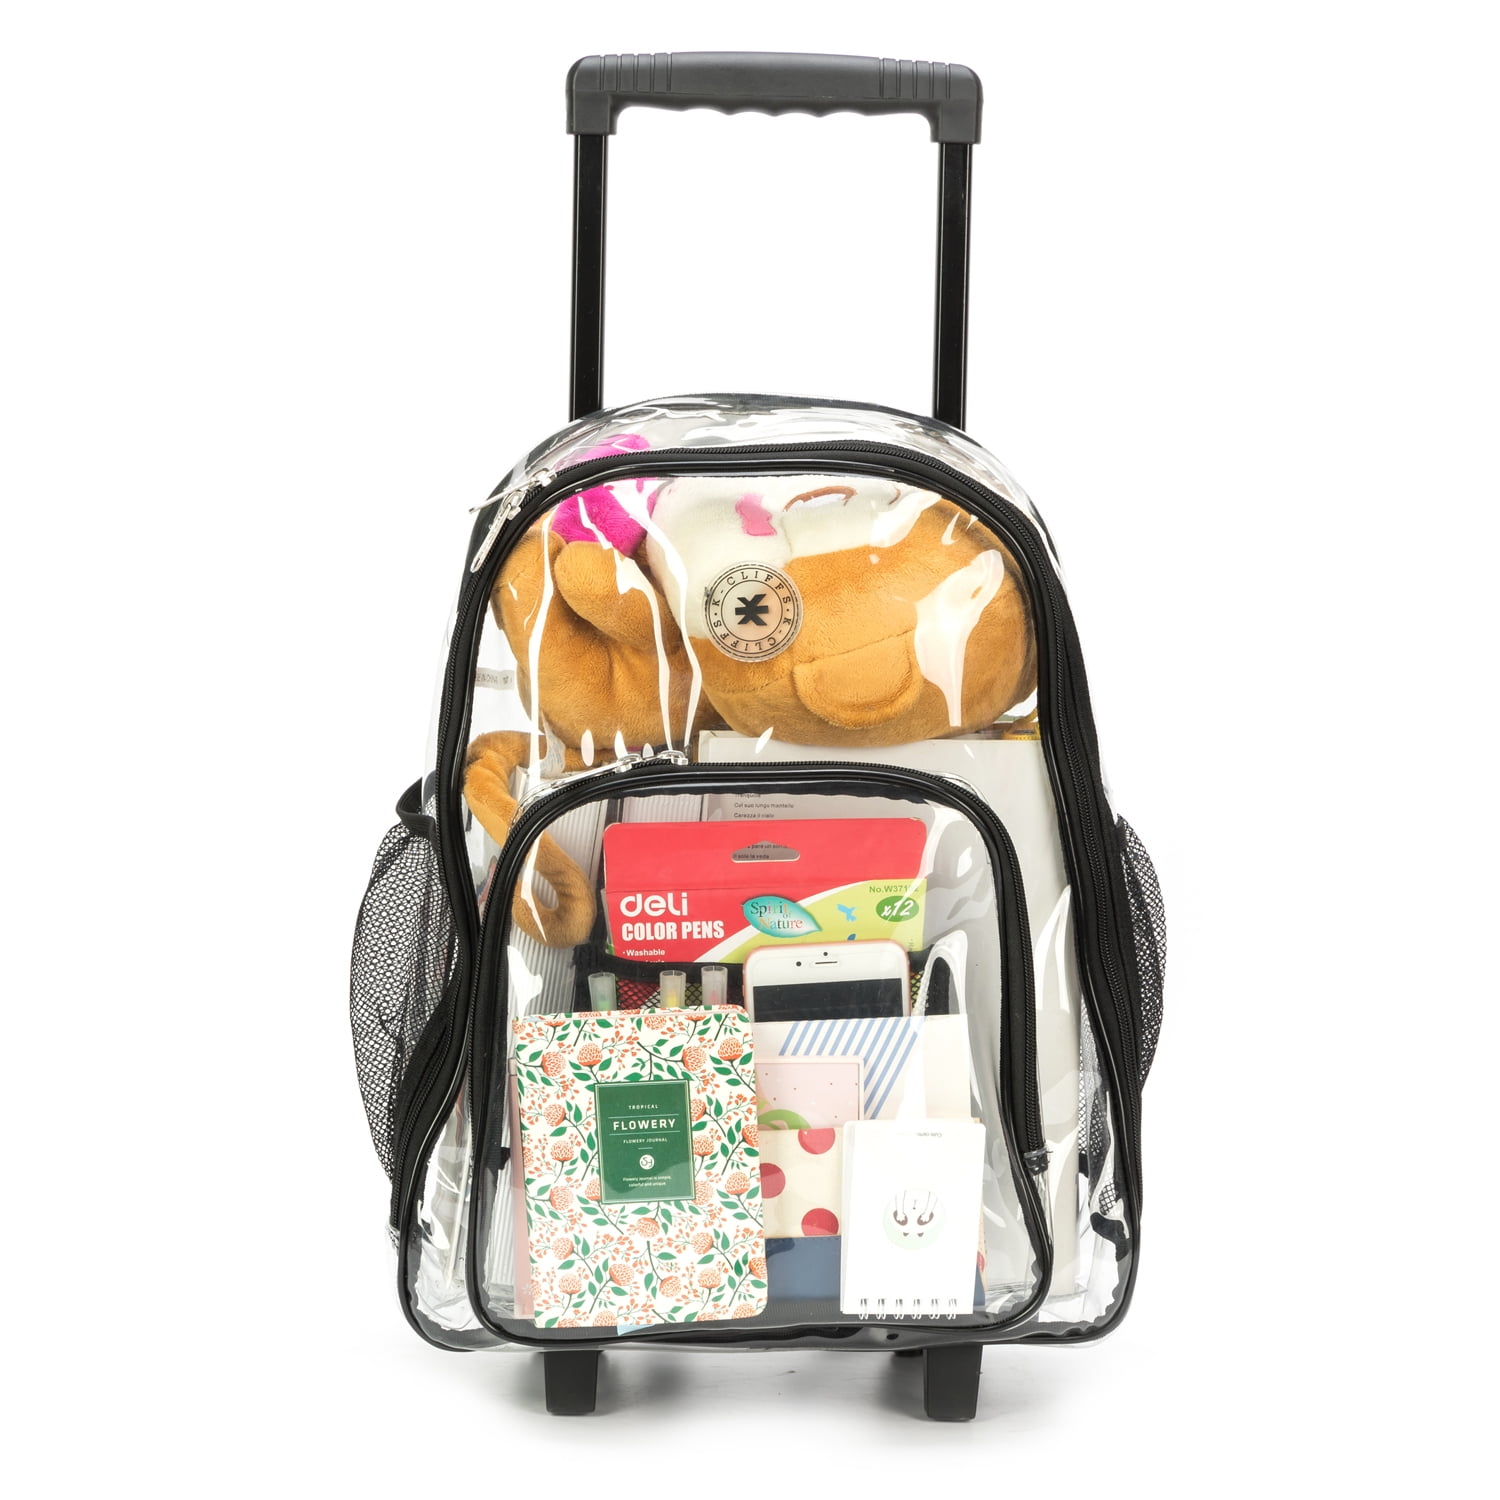 Clear Backpack Heavy Duty See Through Daypack School Bookbag with - Walmart.com